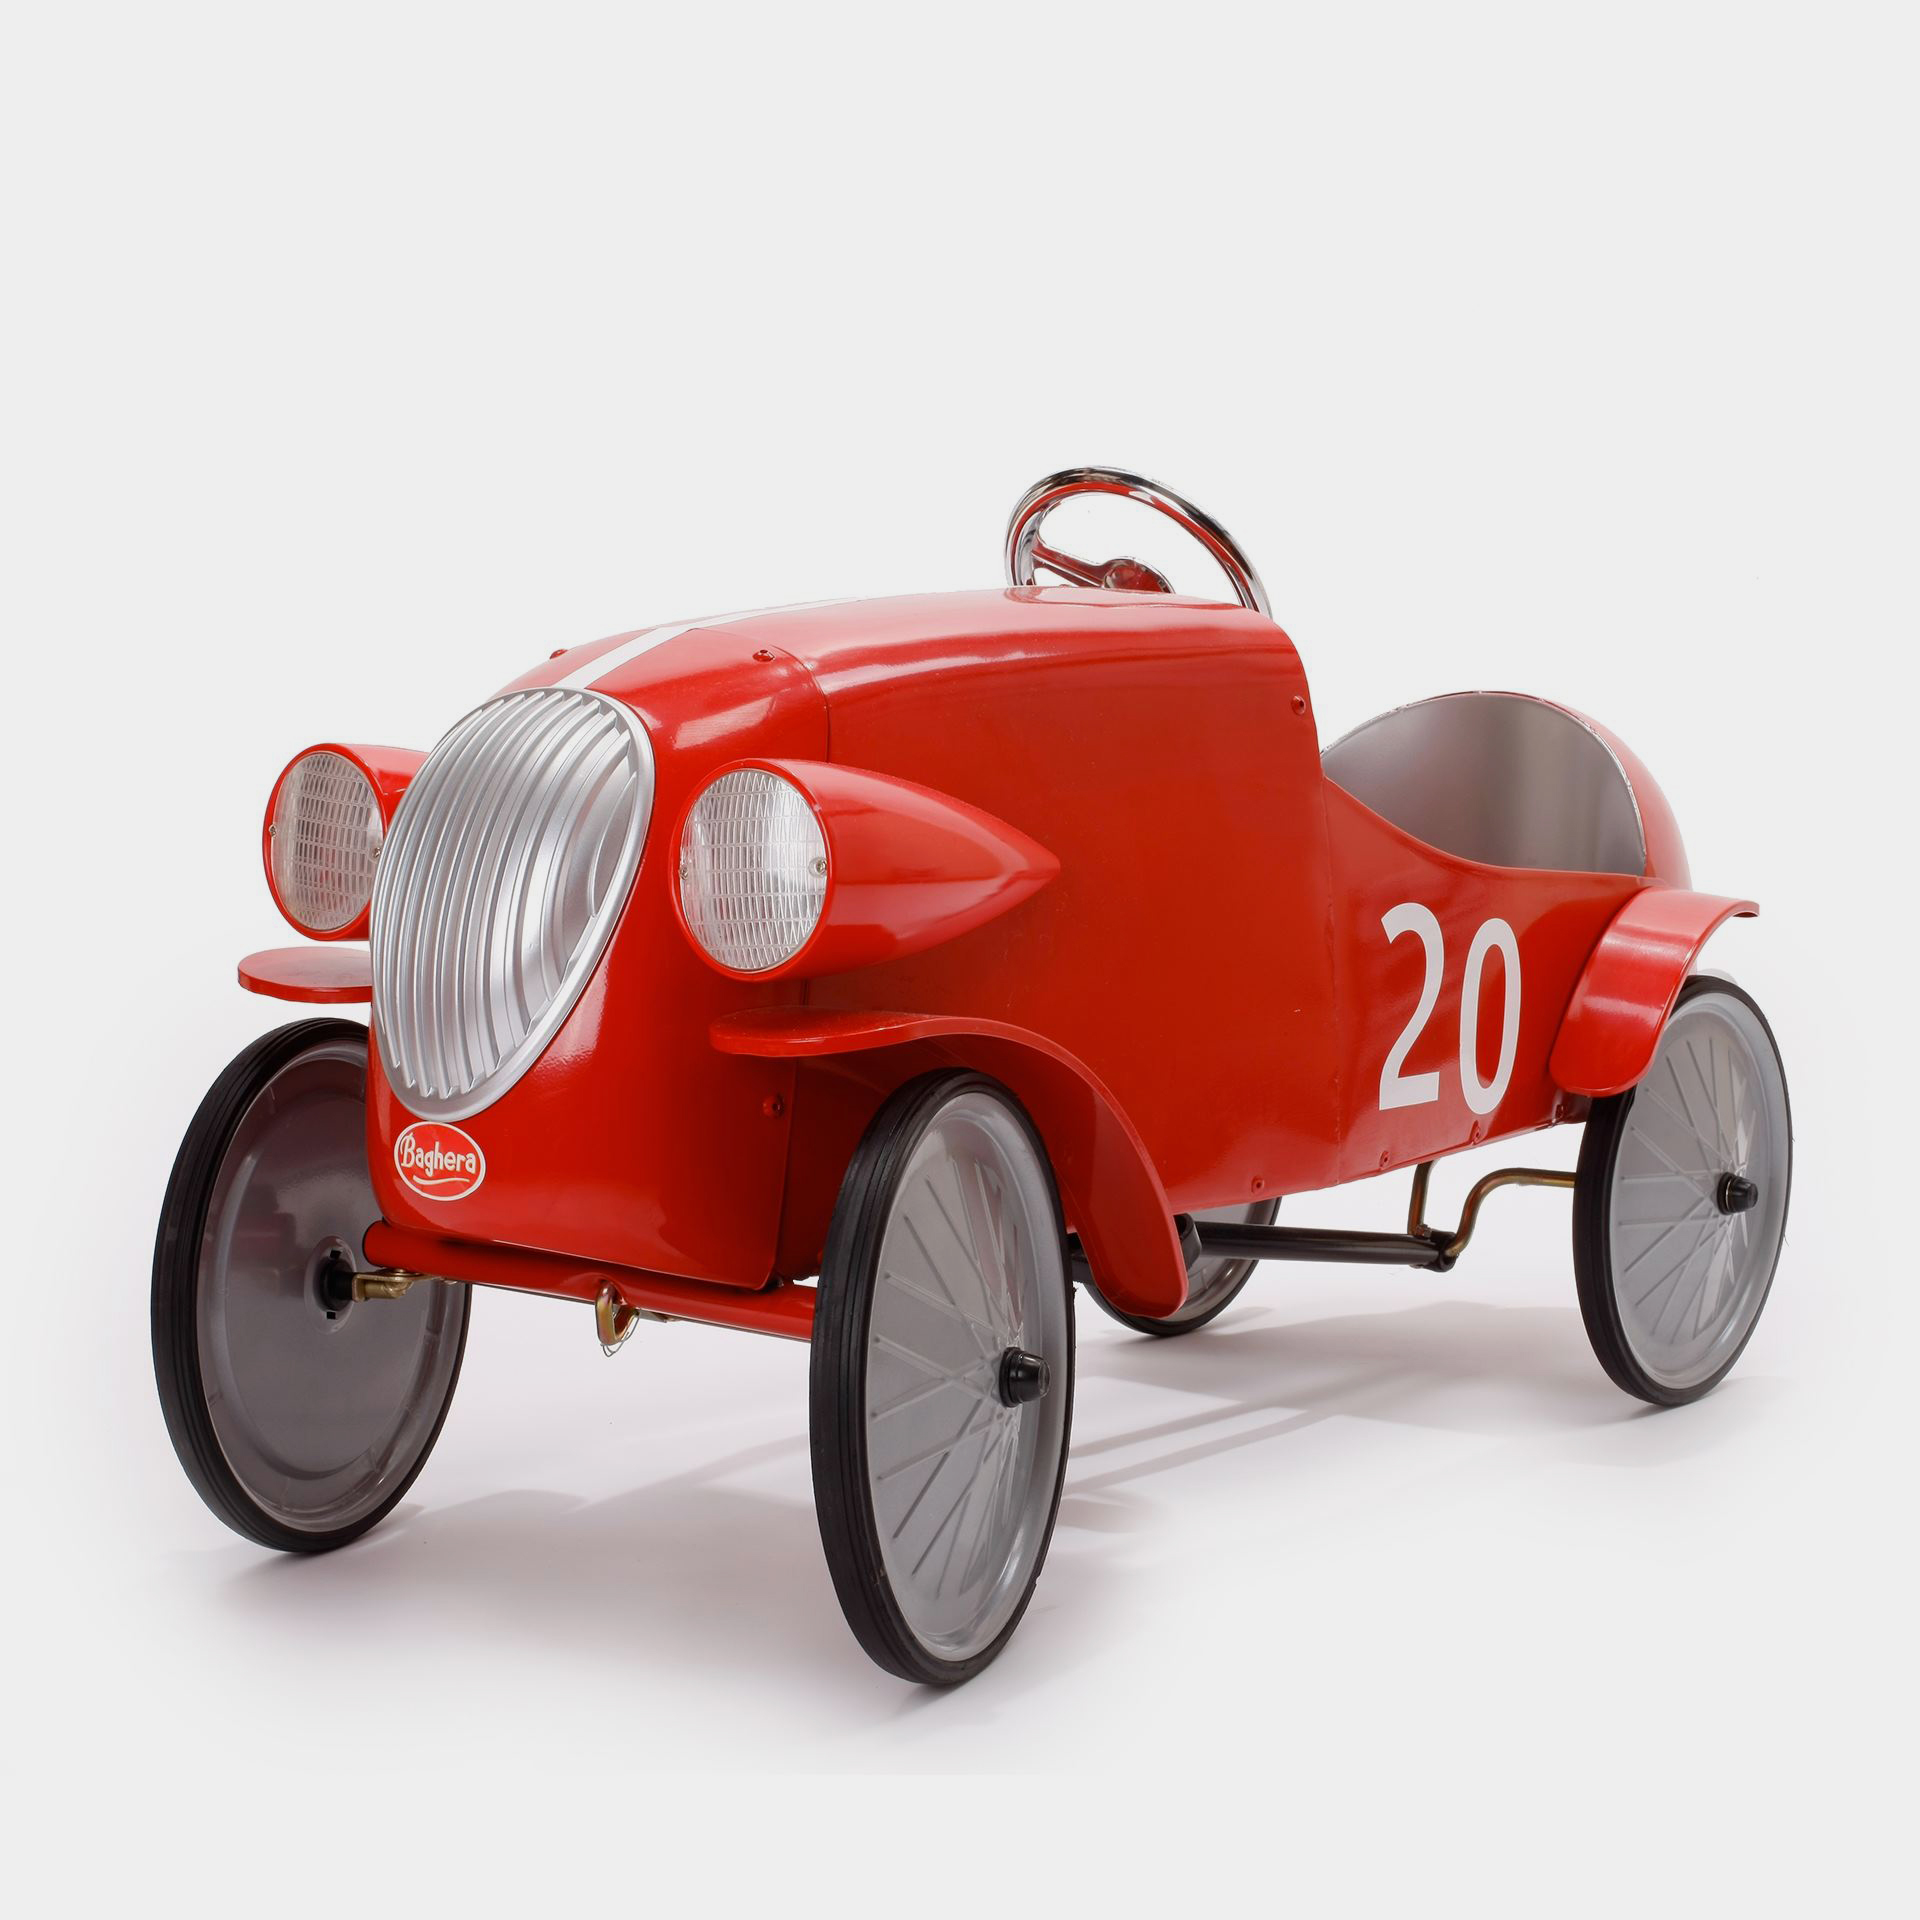 Le Mans Red Pedal Car Baghera Classic Pedal Car Co